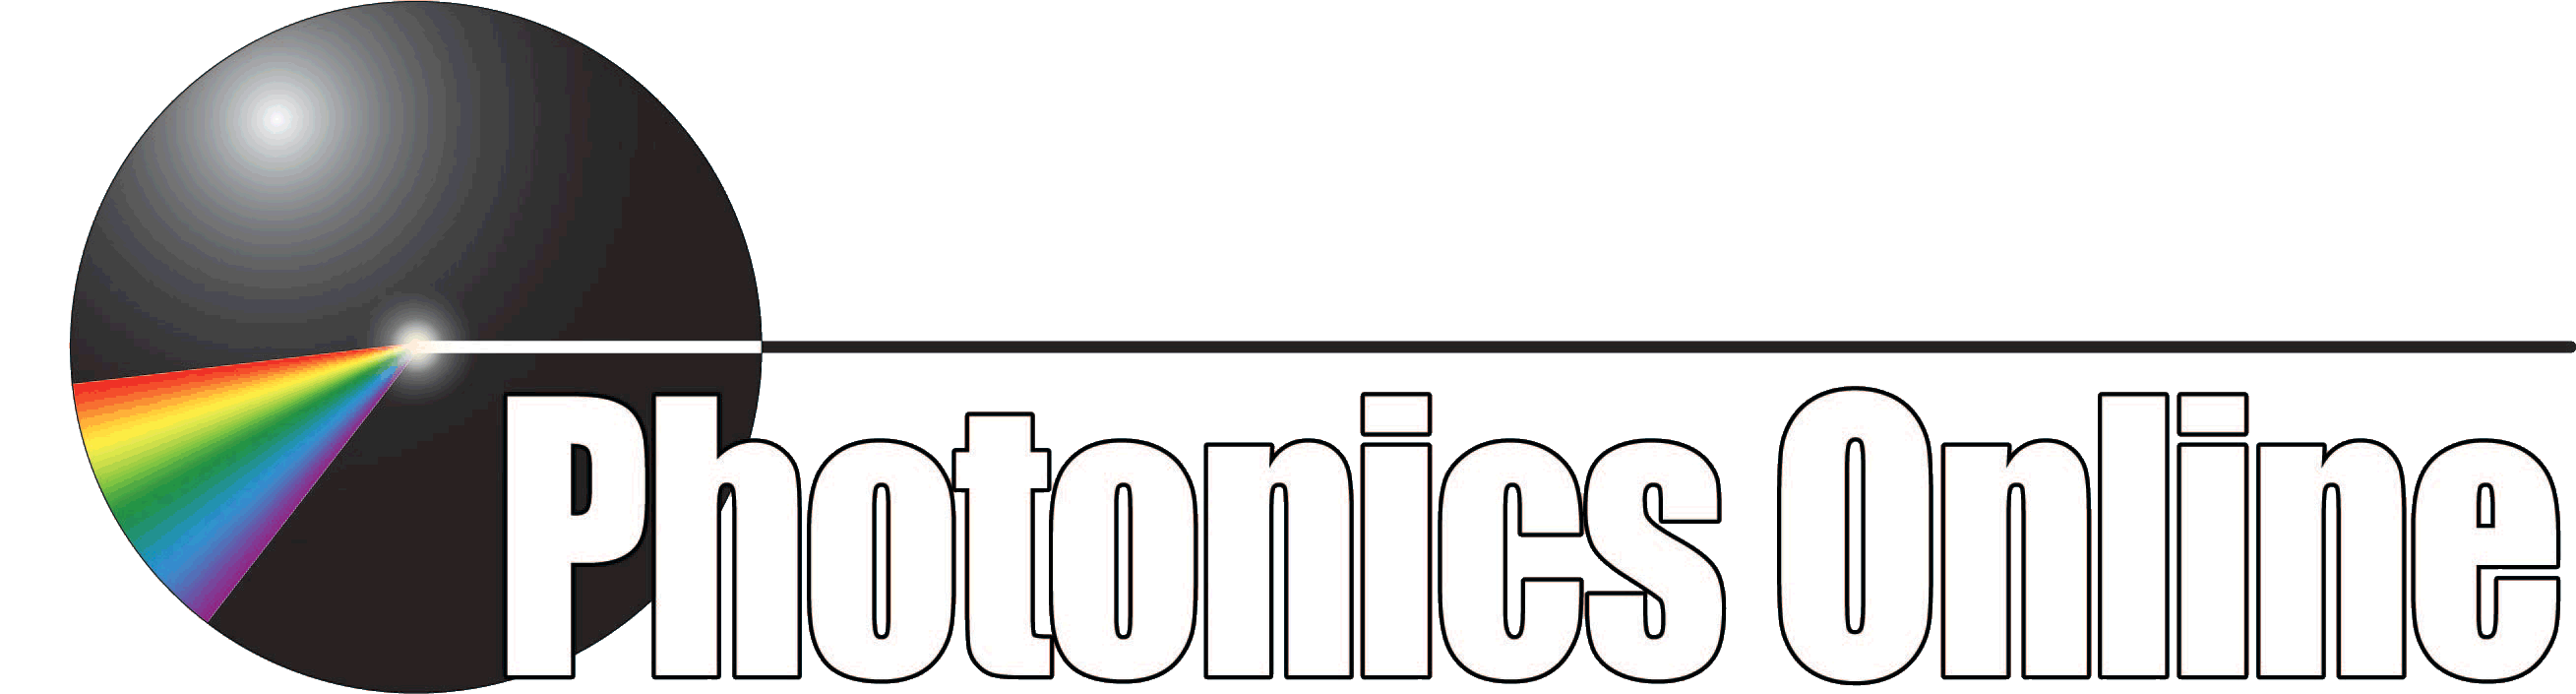 Photonics Online logo.